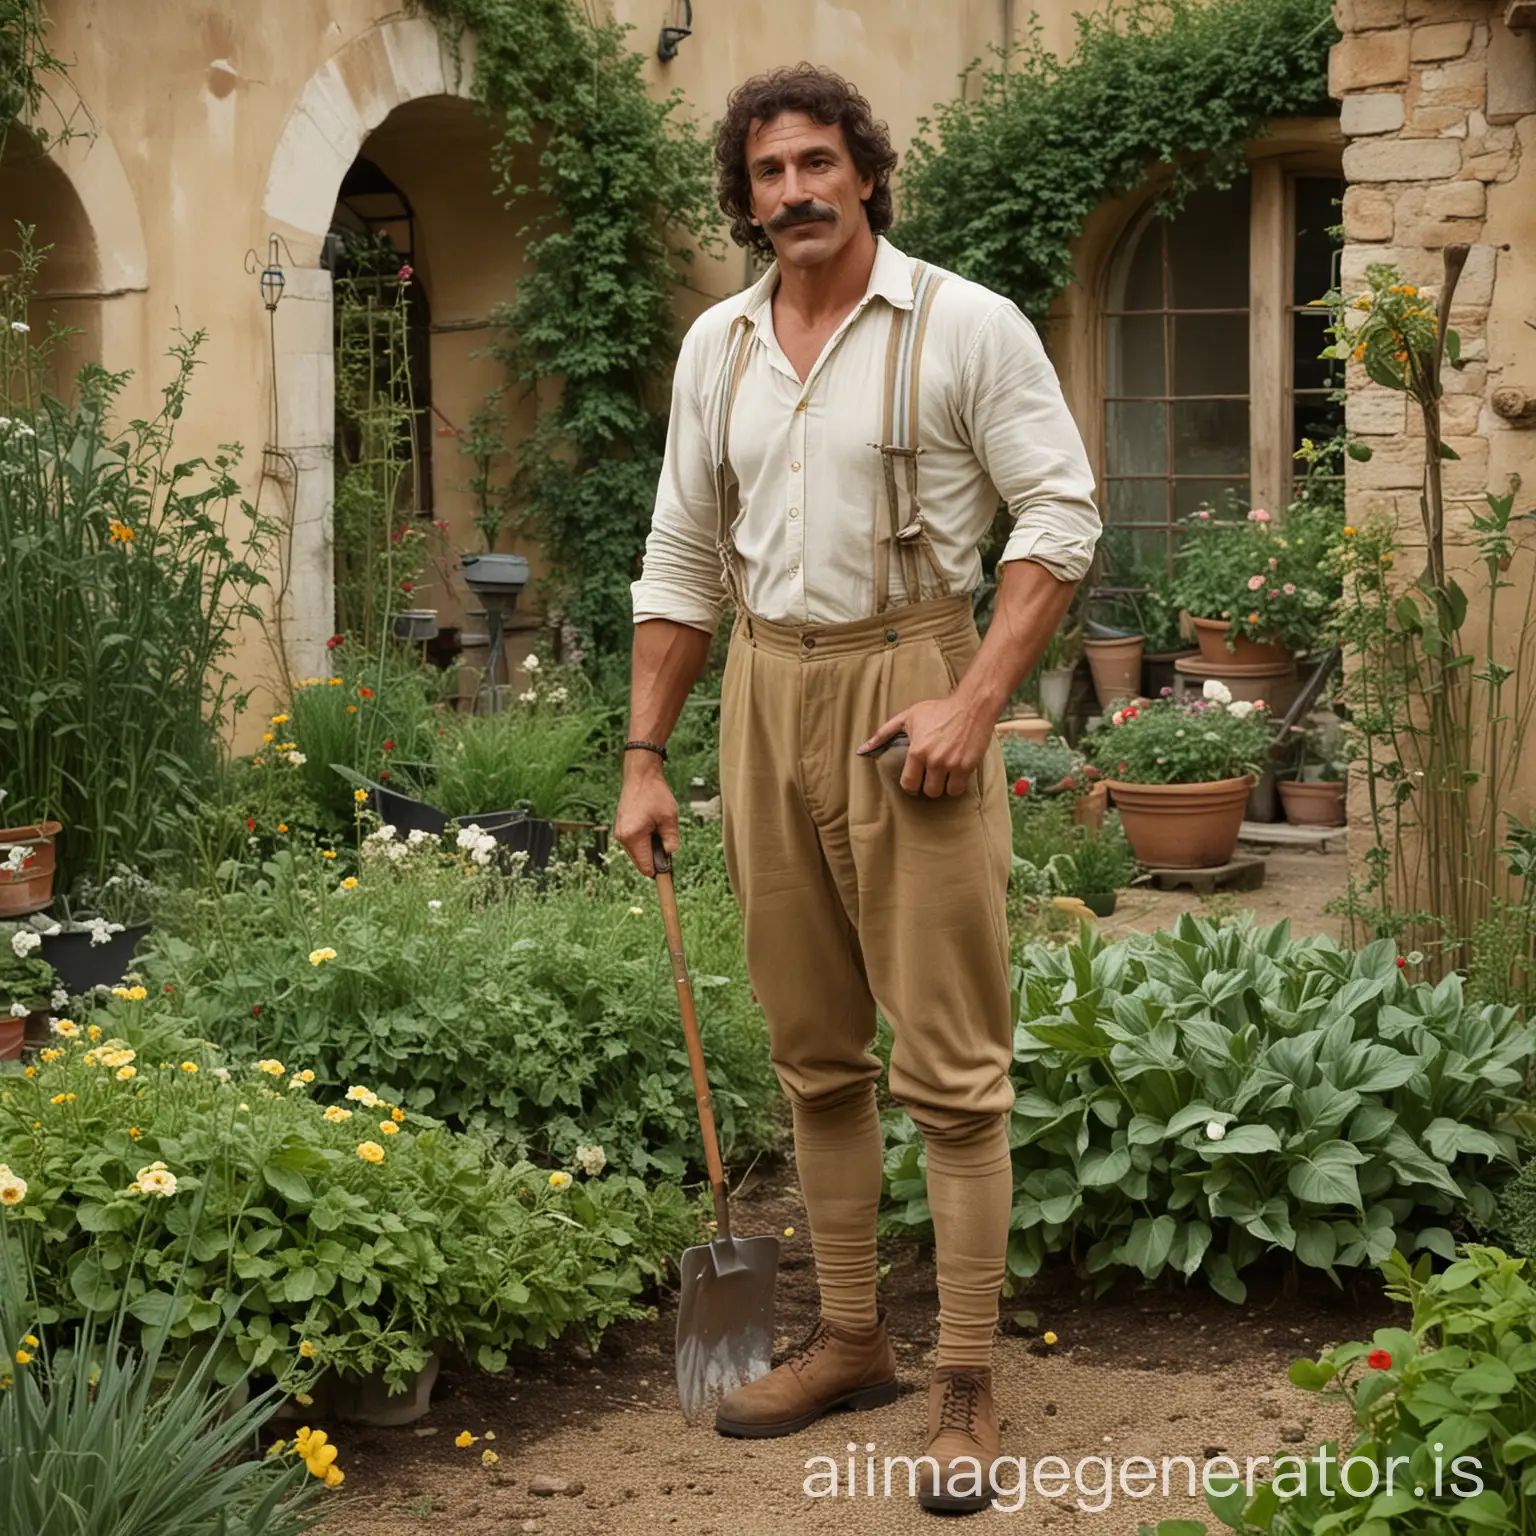 a buff italian gardener